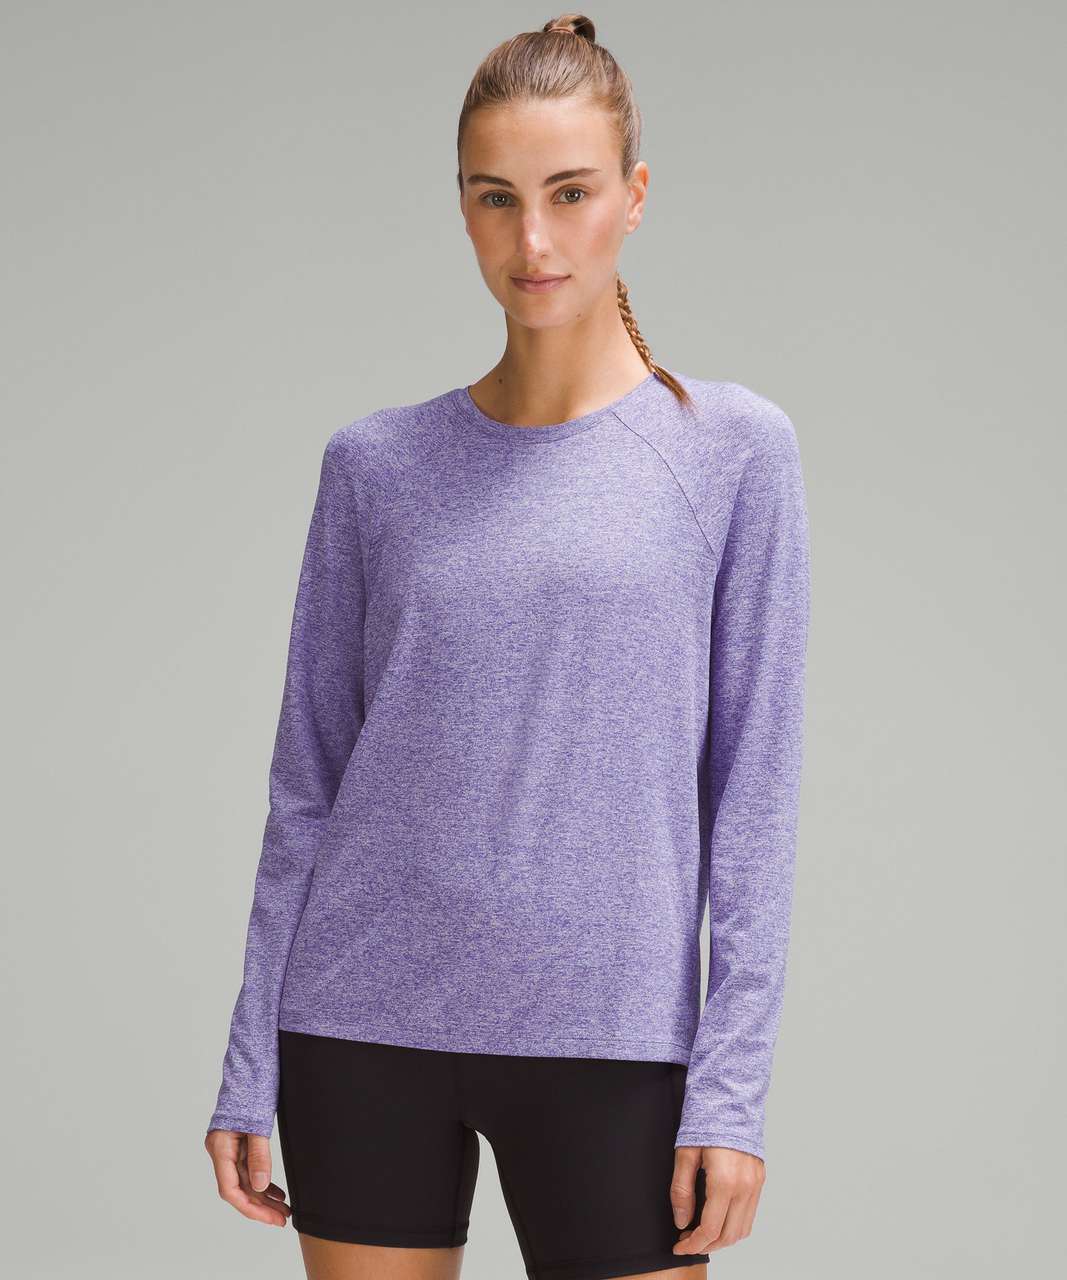 Lululemon License to Train Classic-Fit Long-Sleeve Shirt - Heathered Petrol Purple